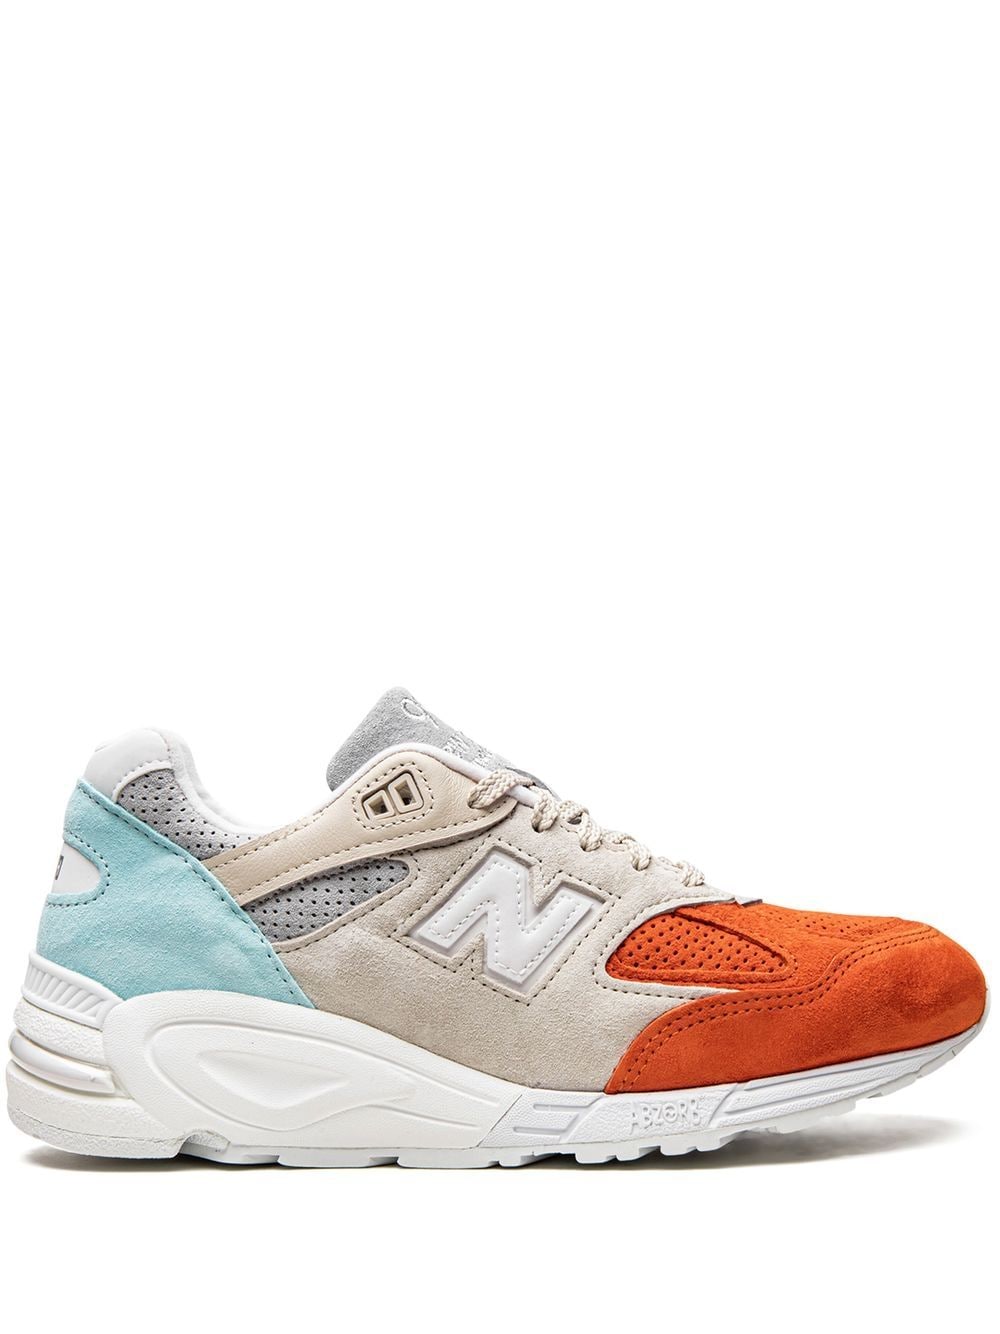 New Balance M990 V2 sneakers - Orange